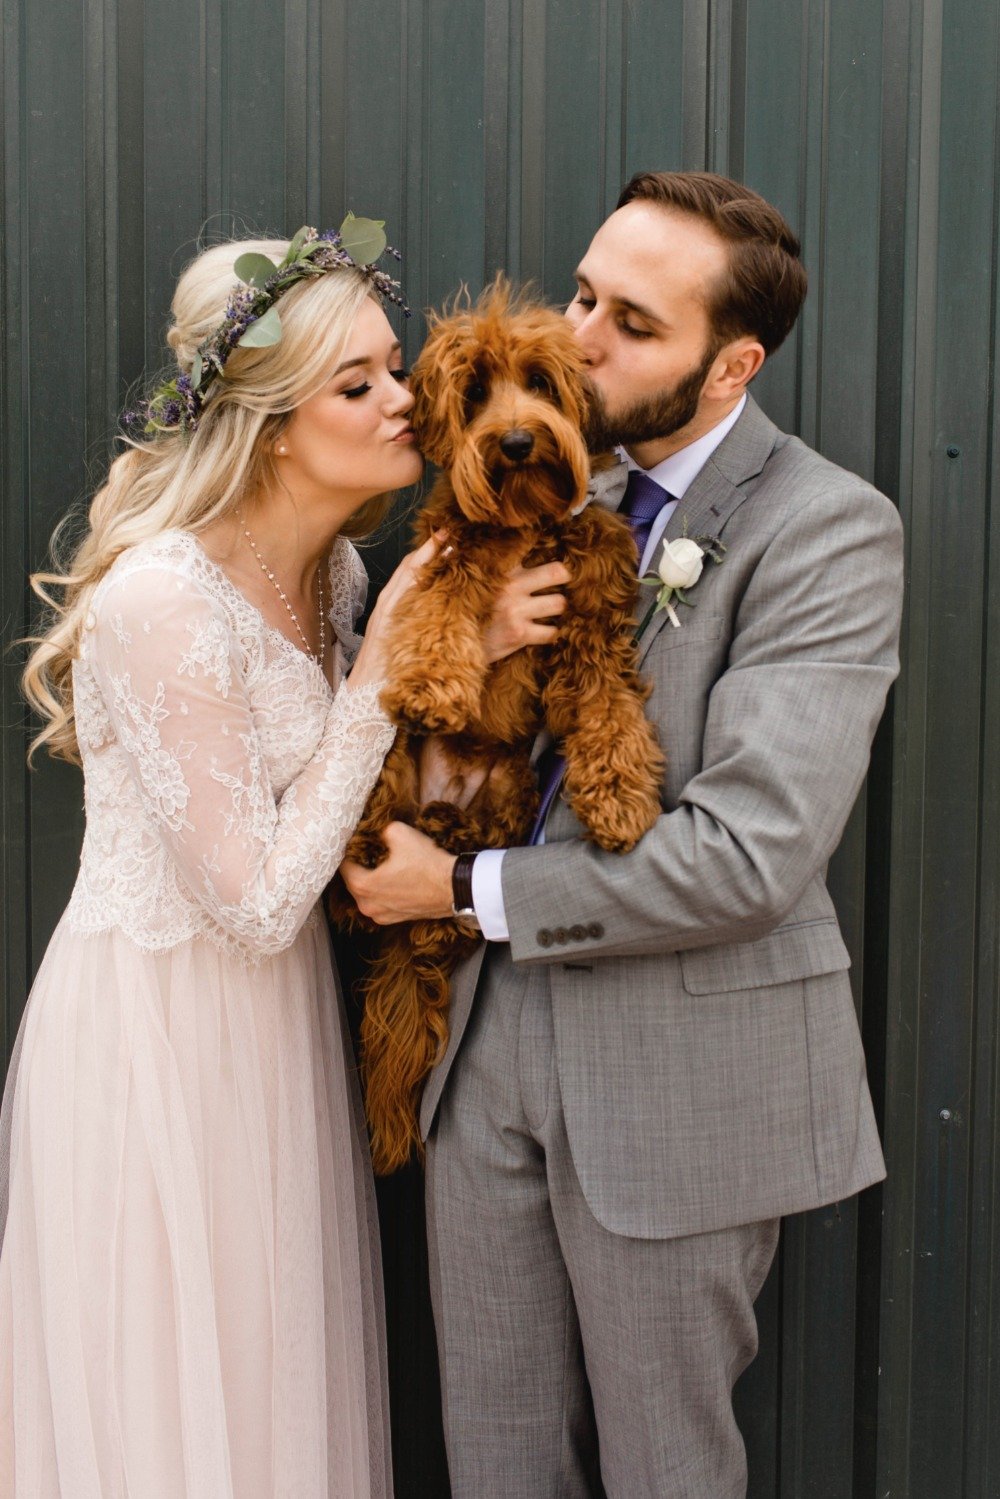 Cute wedding pup wedding photo idea